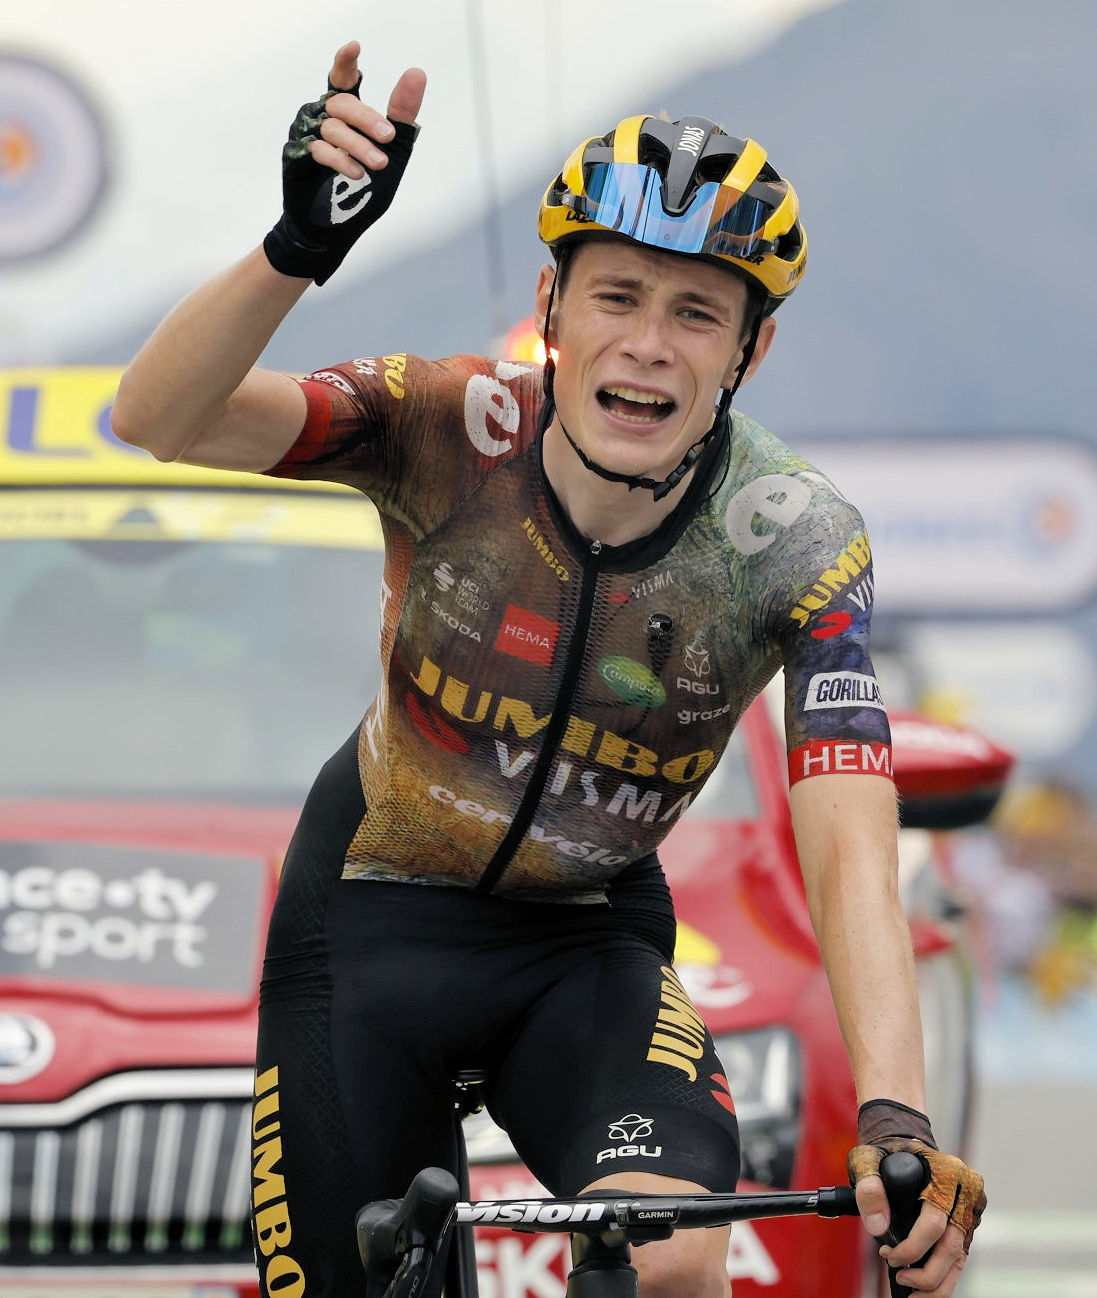 Jonas Vingegaard - Tour de France 2022: Vingegaard wins on Col du Granon to take yellow